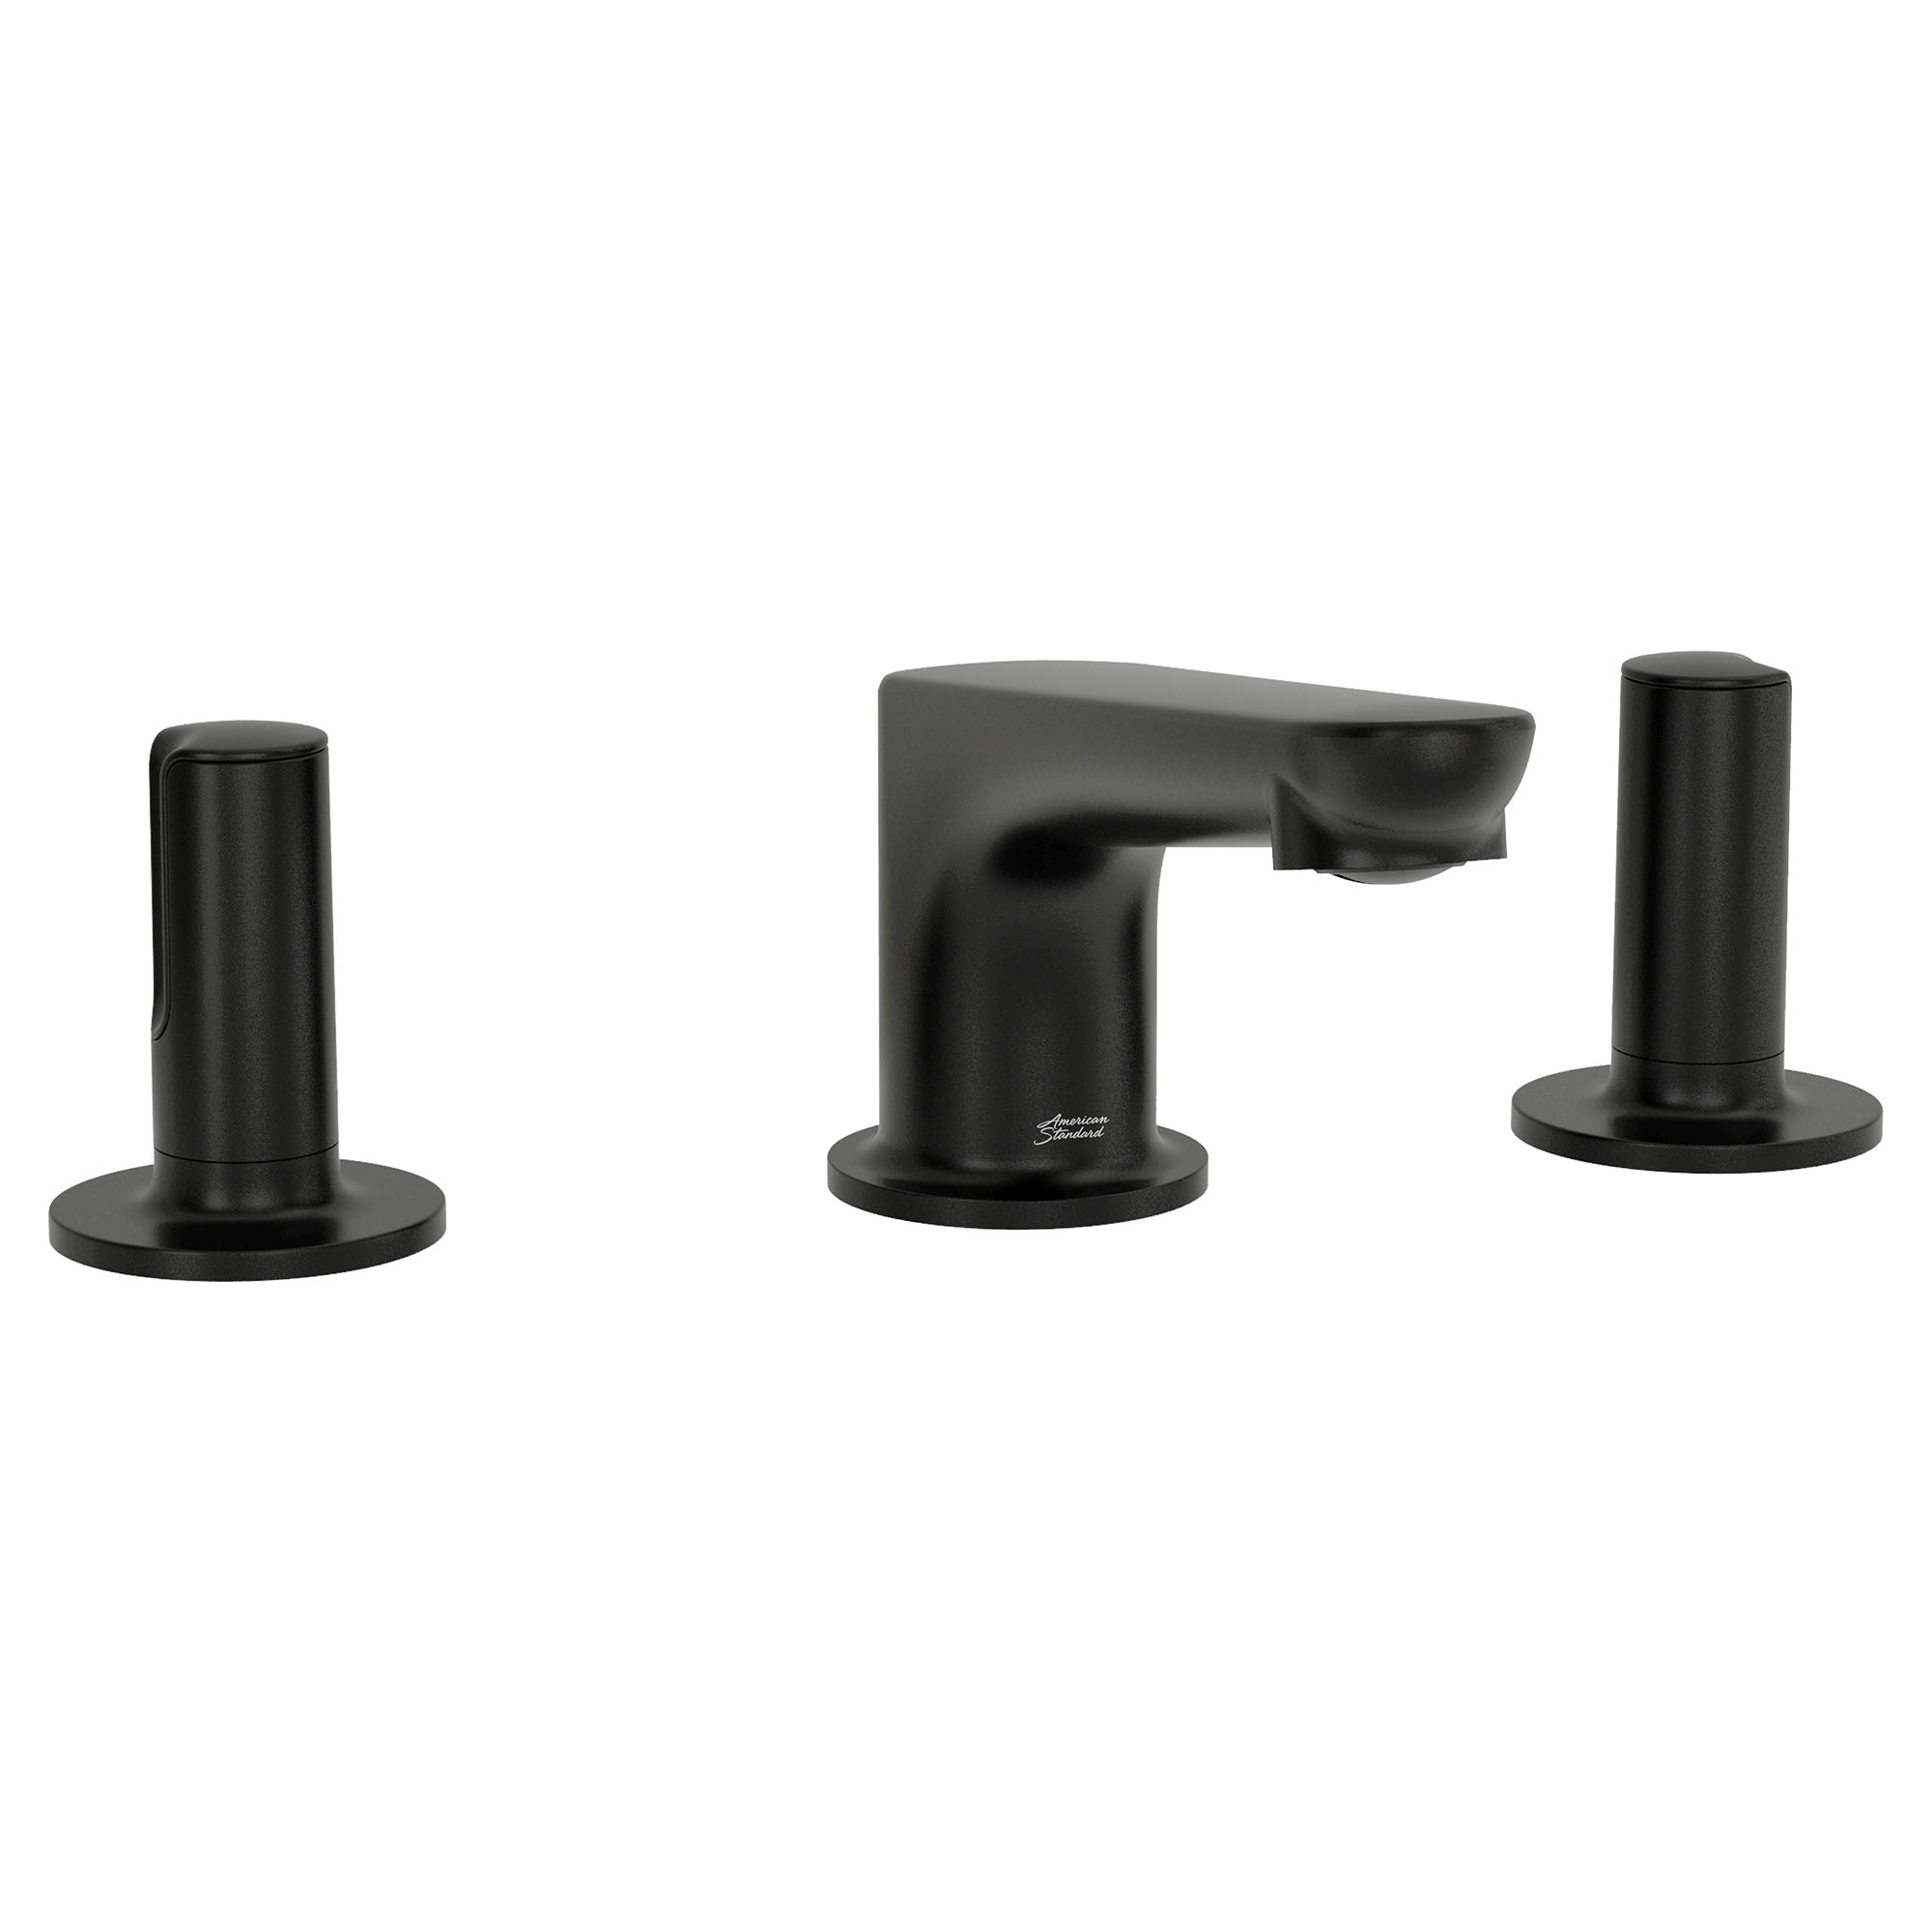 Studio® S Widespread Low Spout 2-Handle Bathroom Faucet 1.2 gpm/4.5 L/min With Knob Handles